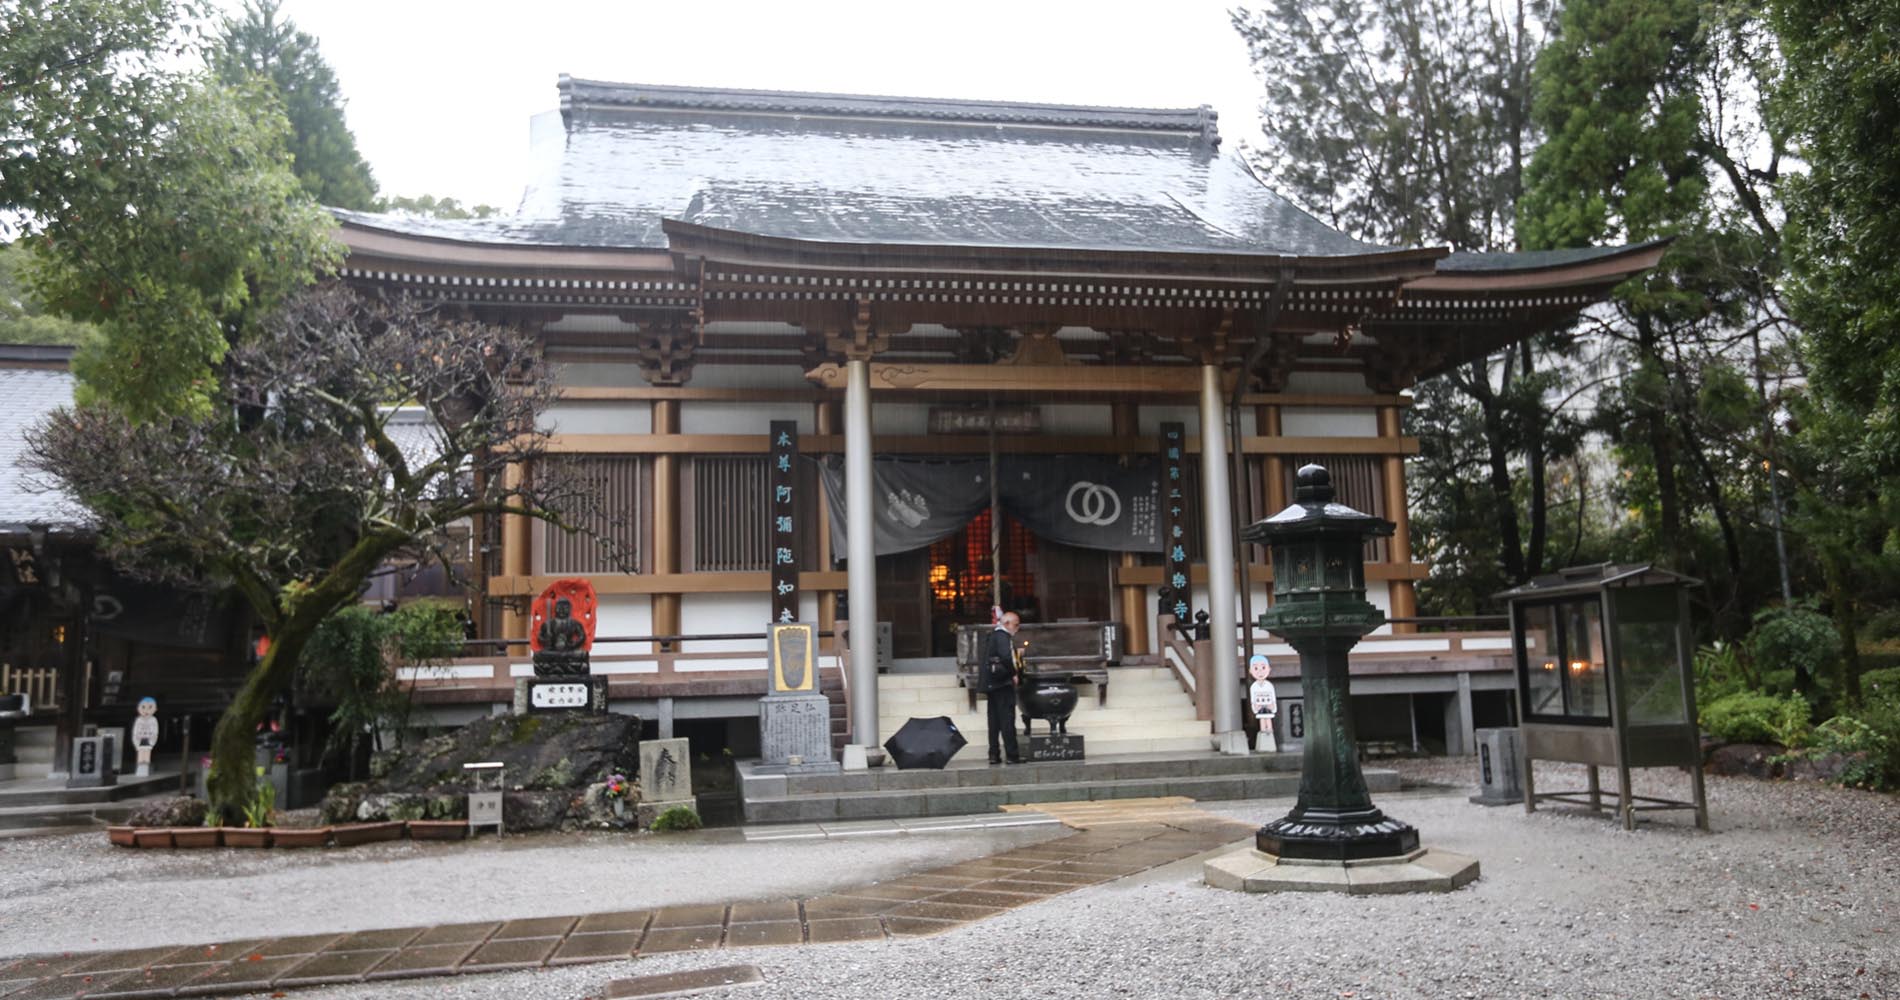 Le temple principal de Zenrakuji